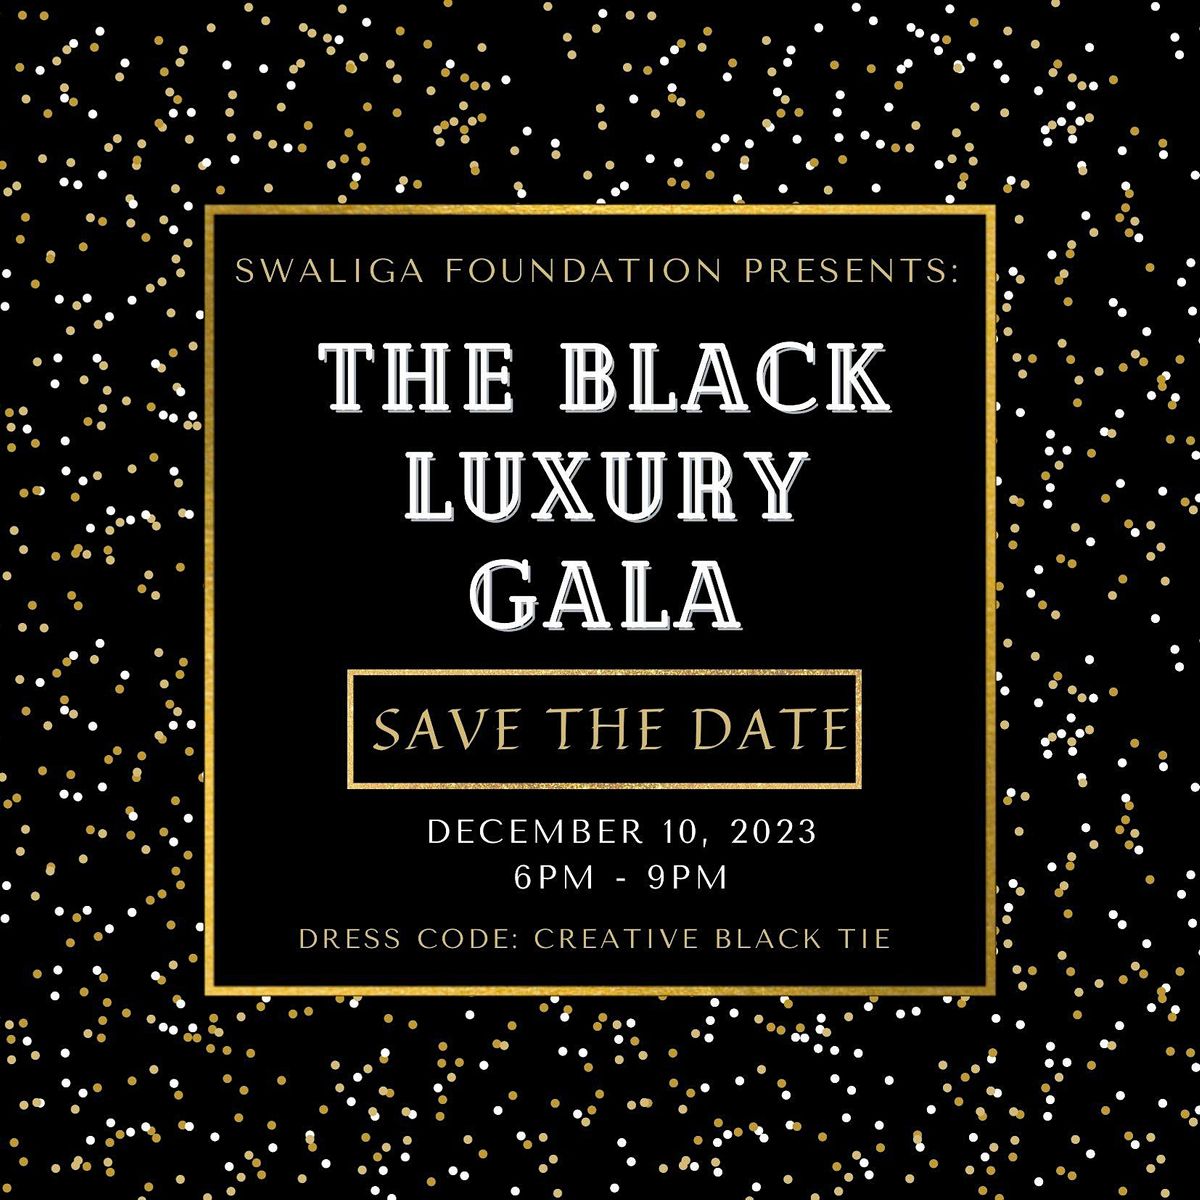 The Black Luxury Gala